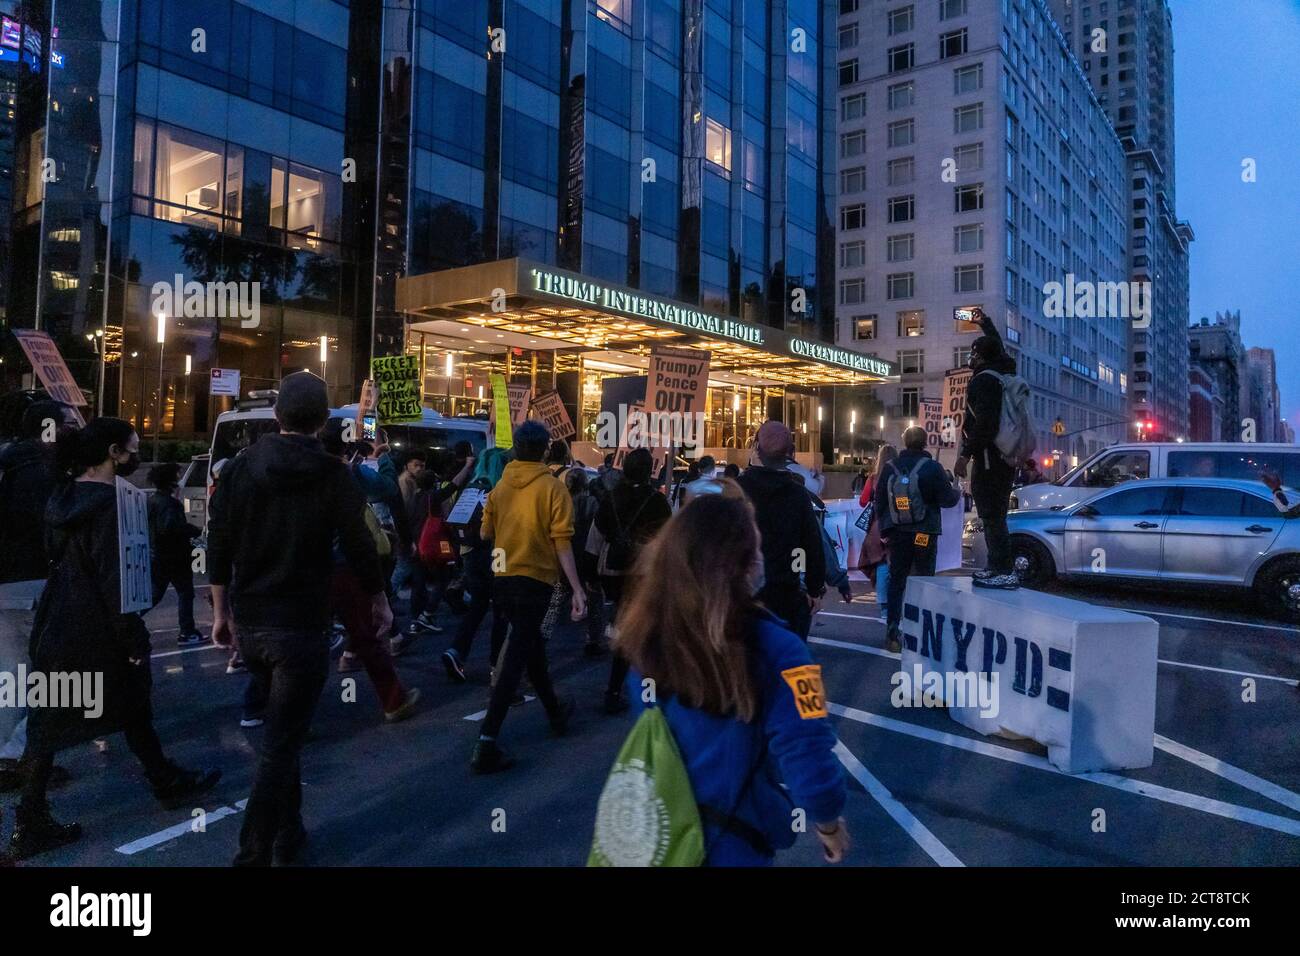 NEW YORK, NY - 21. SEPTEMBER: Am 21. September 2020 treffen sich Demonstranten vor dem Trump International Hotel im Columbus Circle in New York City. Stockfoto